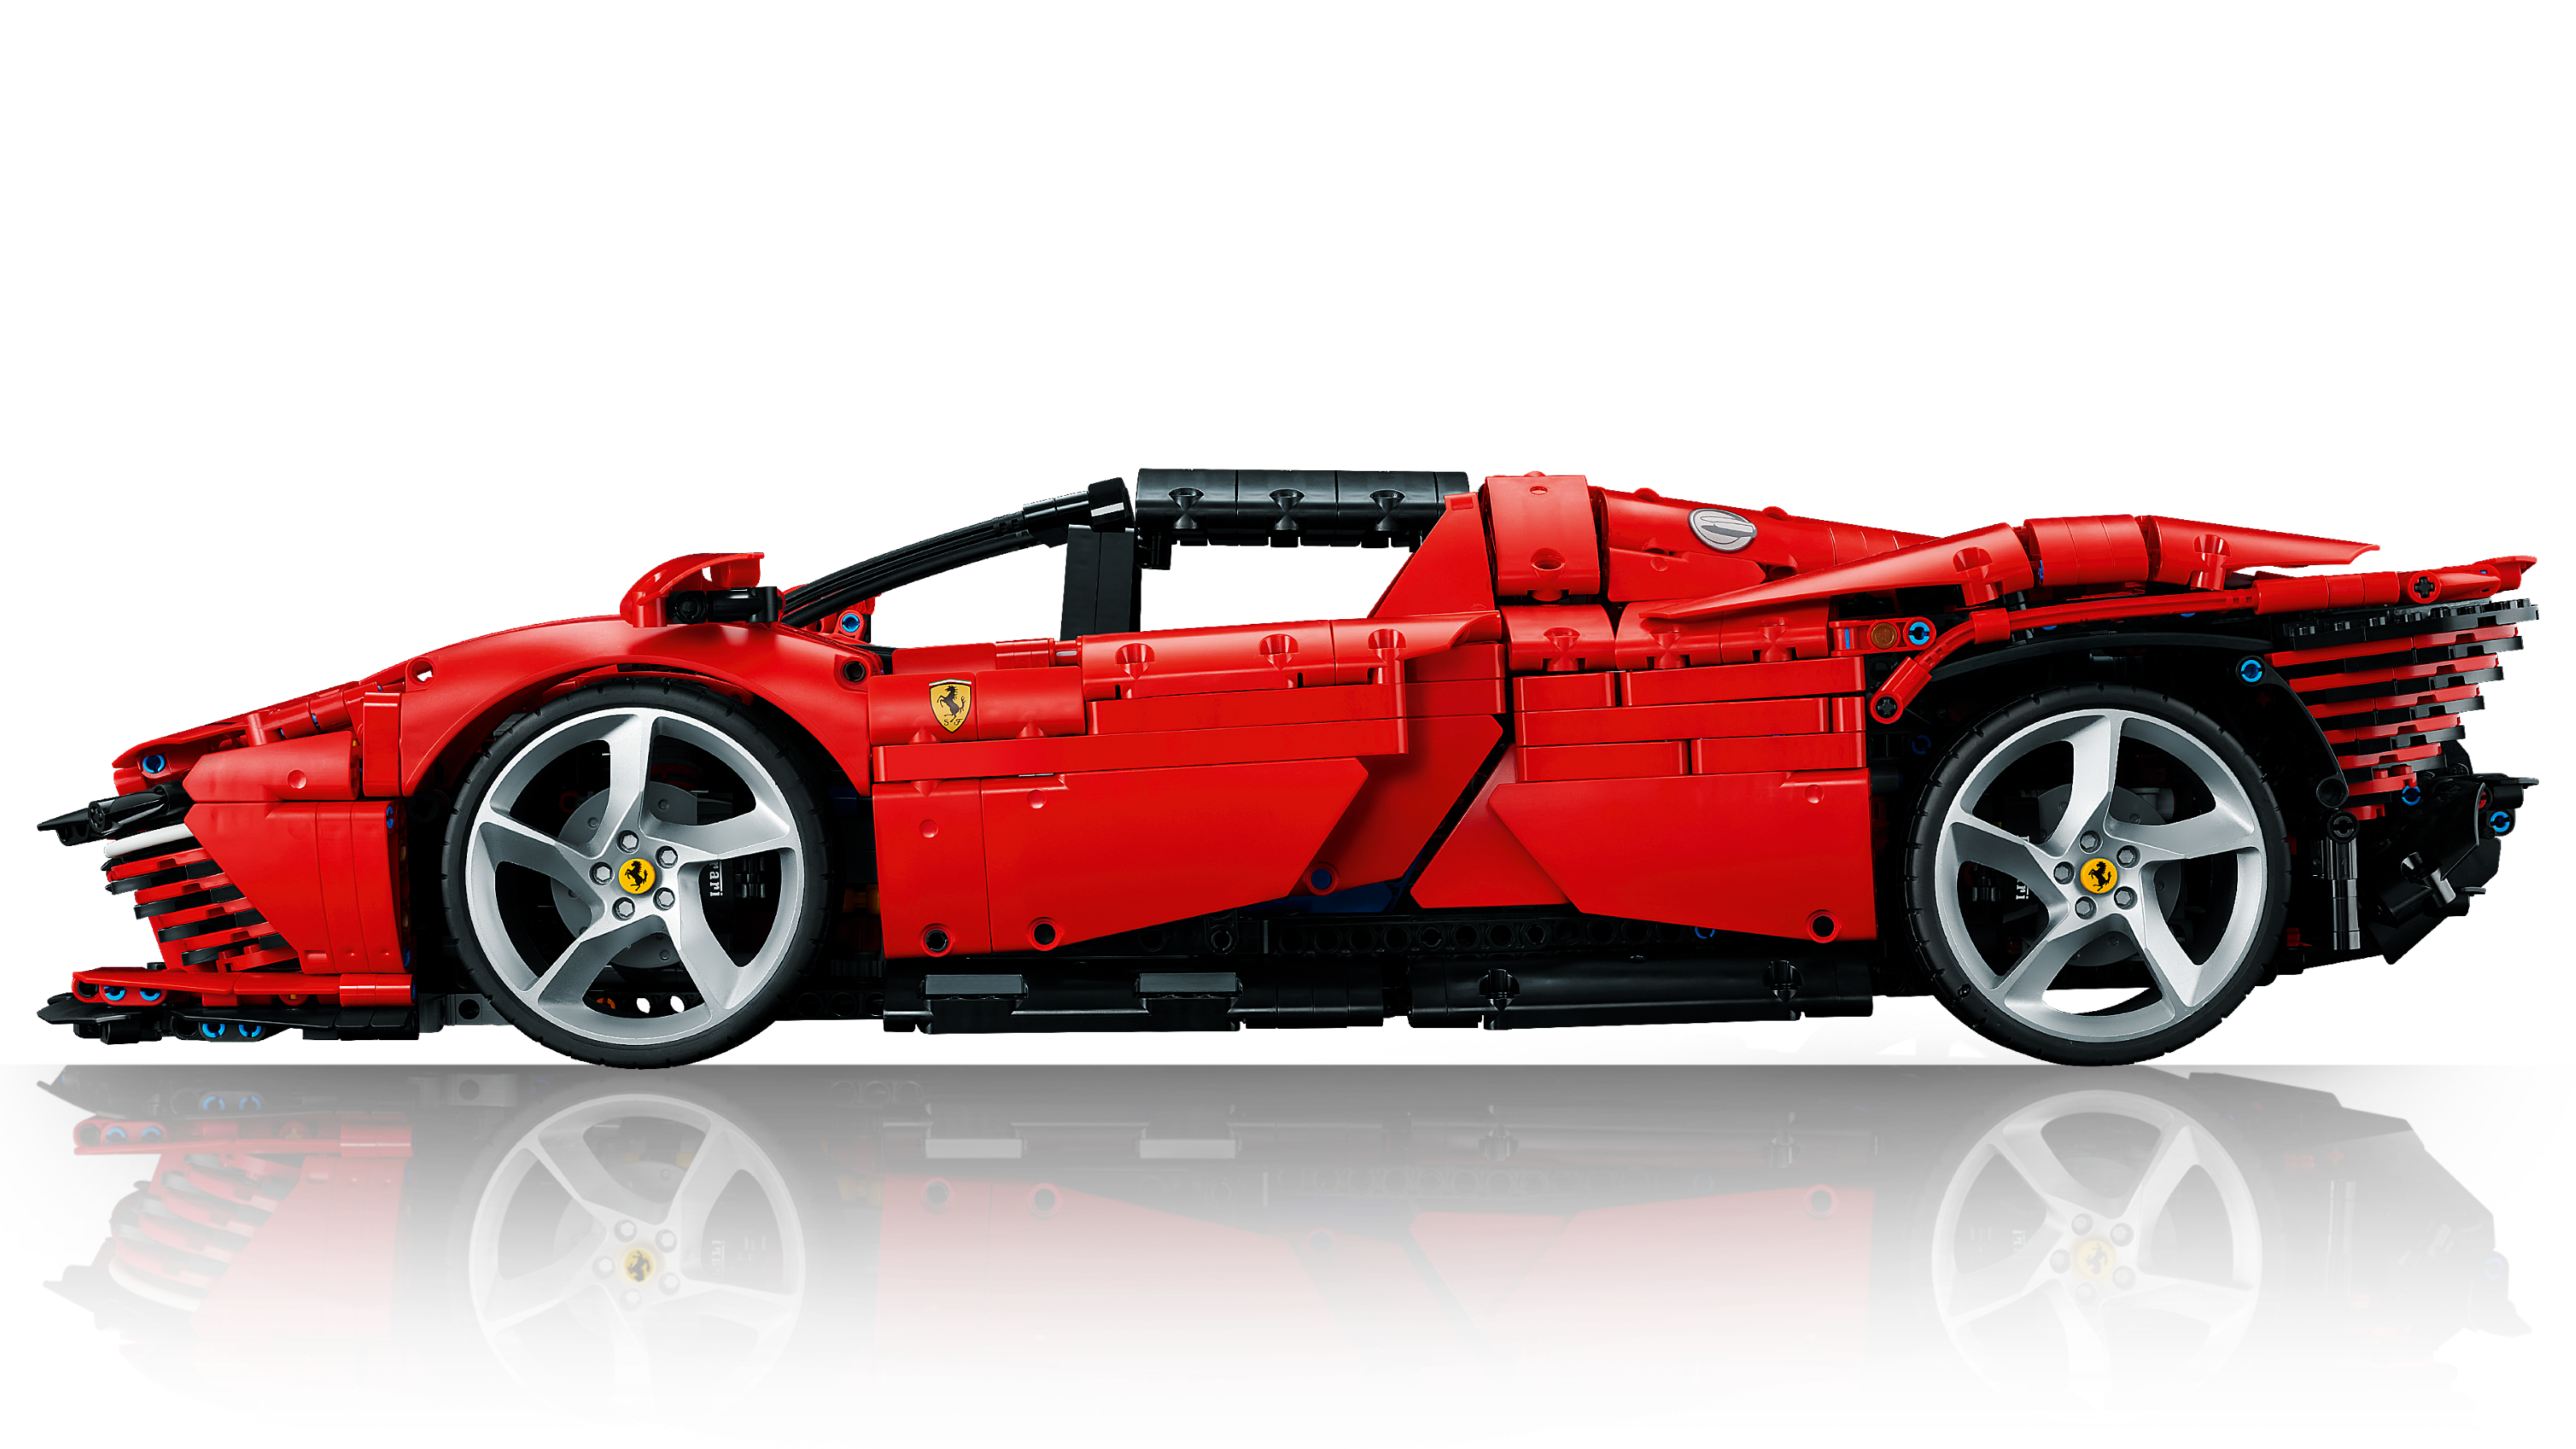 Ferrari Daytona SP3 42143 | テクニック |レゴ®ストア公式